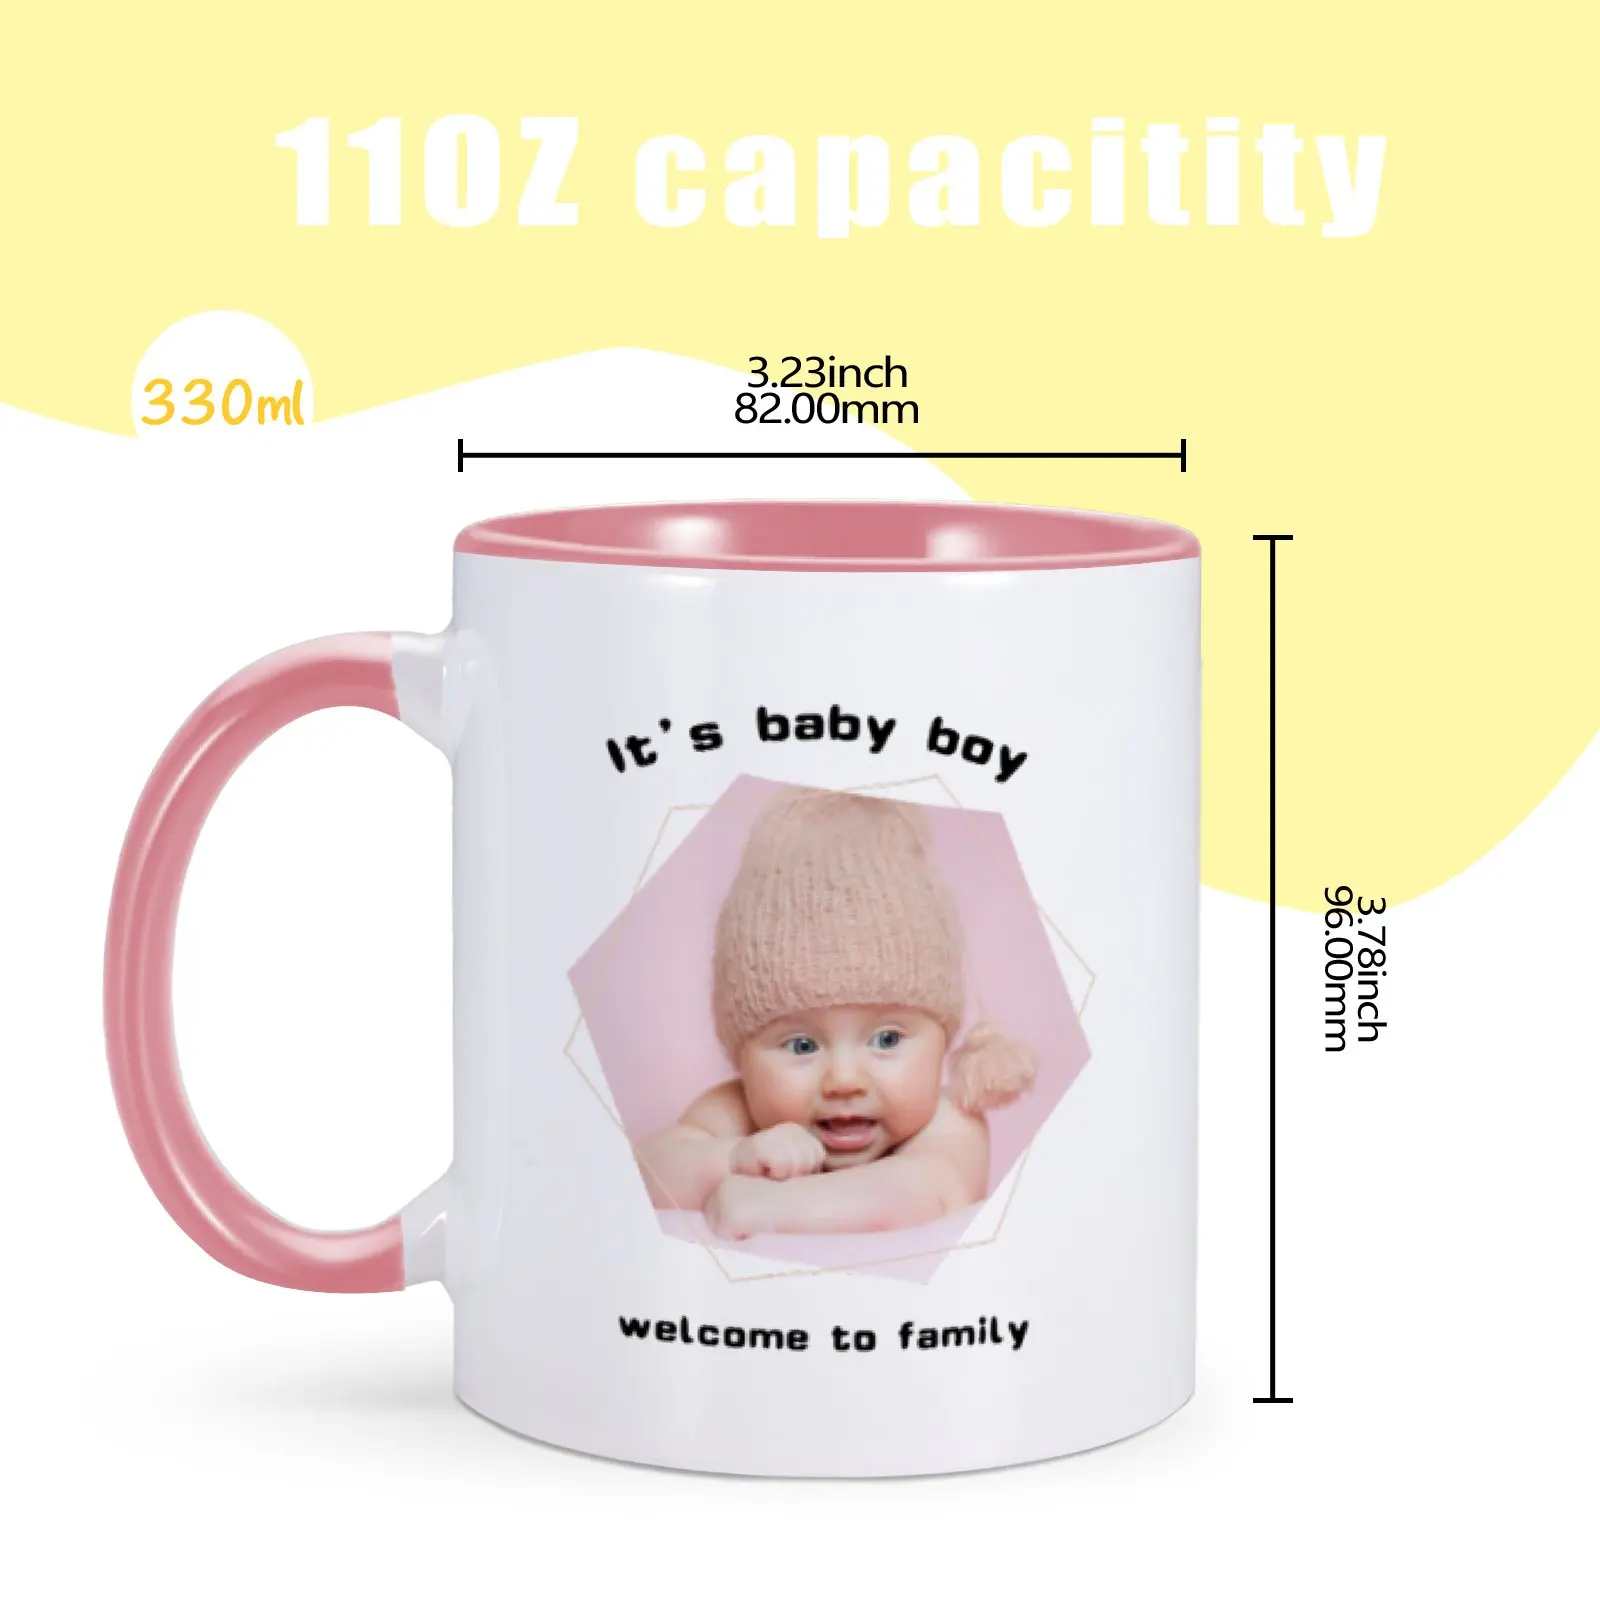 https://ae01.alicdn.com/kf/S33da1a748fa442548a104ceff3638636M/Custom-Baby-Ceramic-Mug-Personalized-Photo-Birthday-Christmas-Gift-Cups-for-New-Dad-Mom-Coffee-Milk.jpg